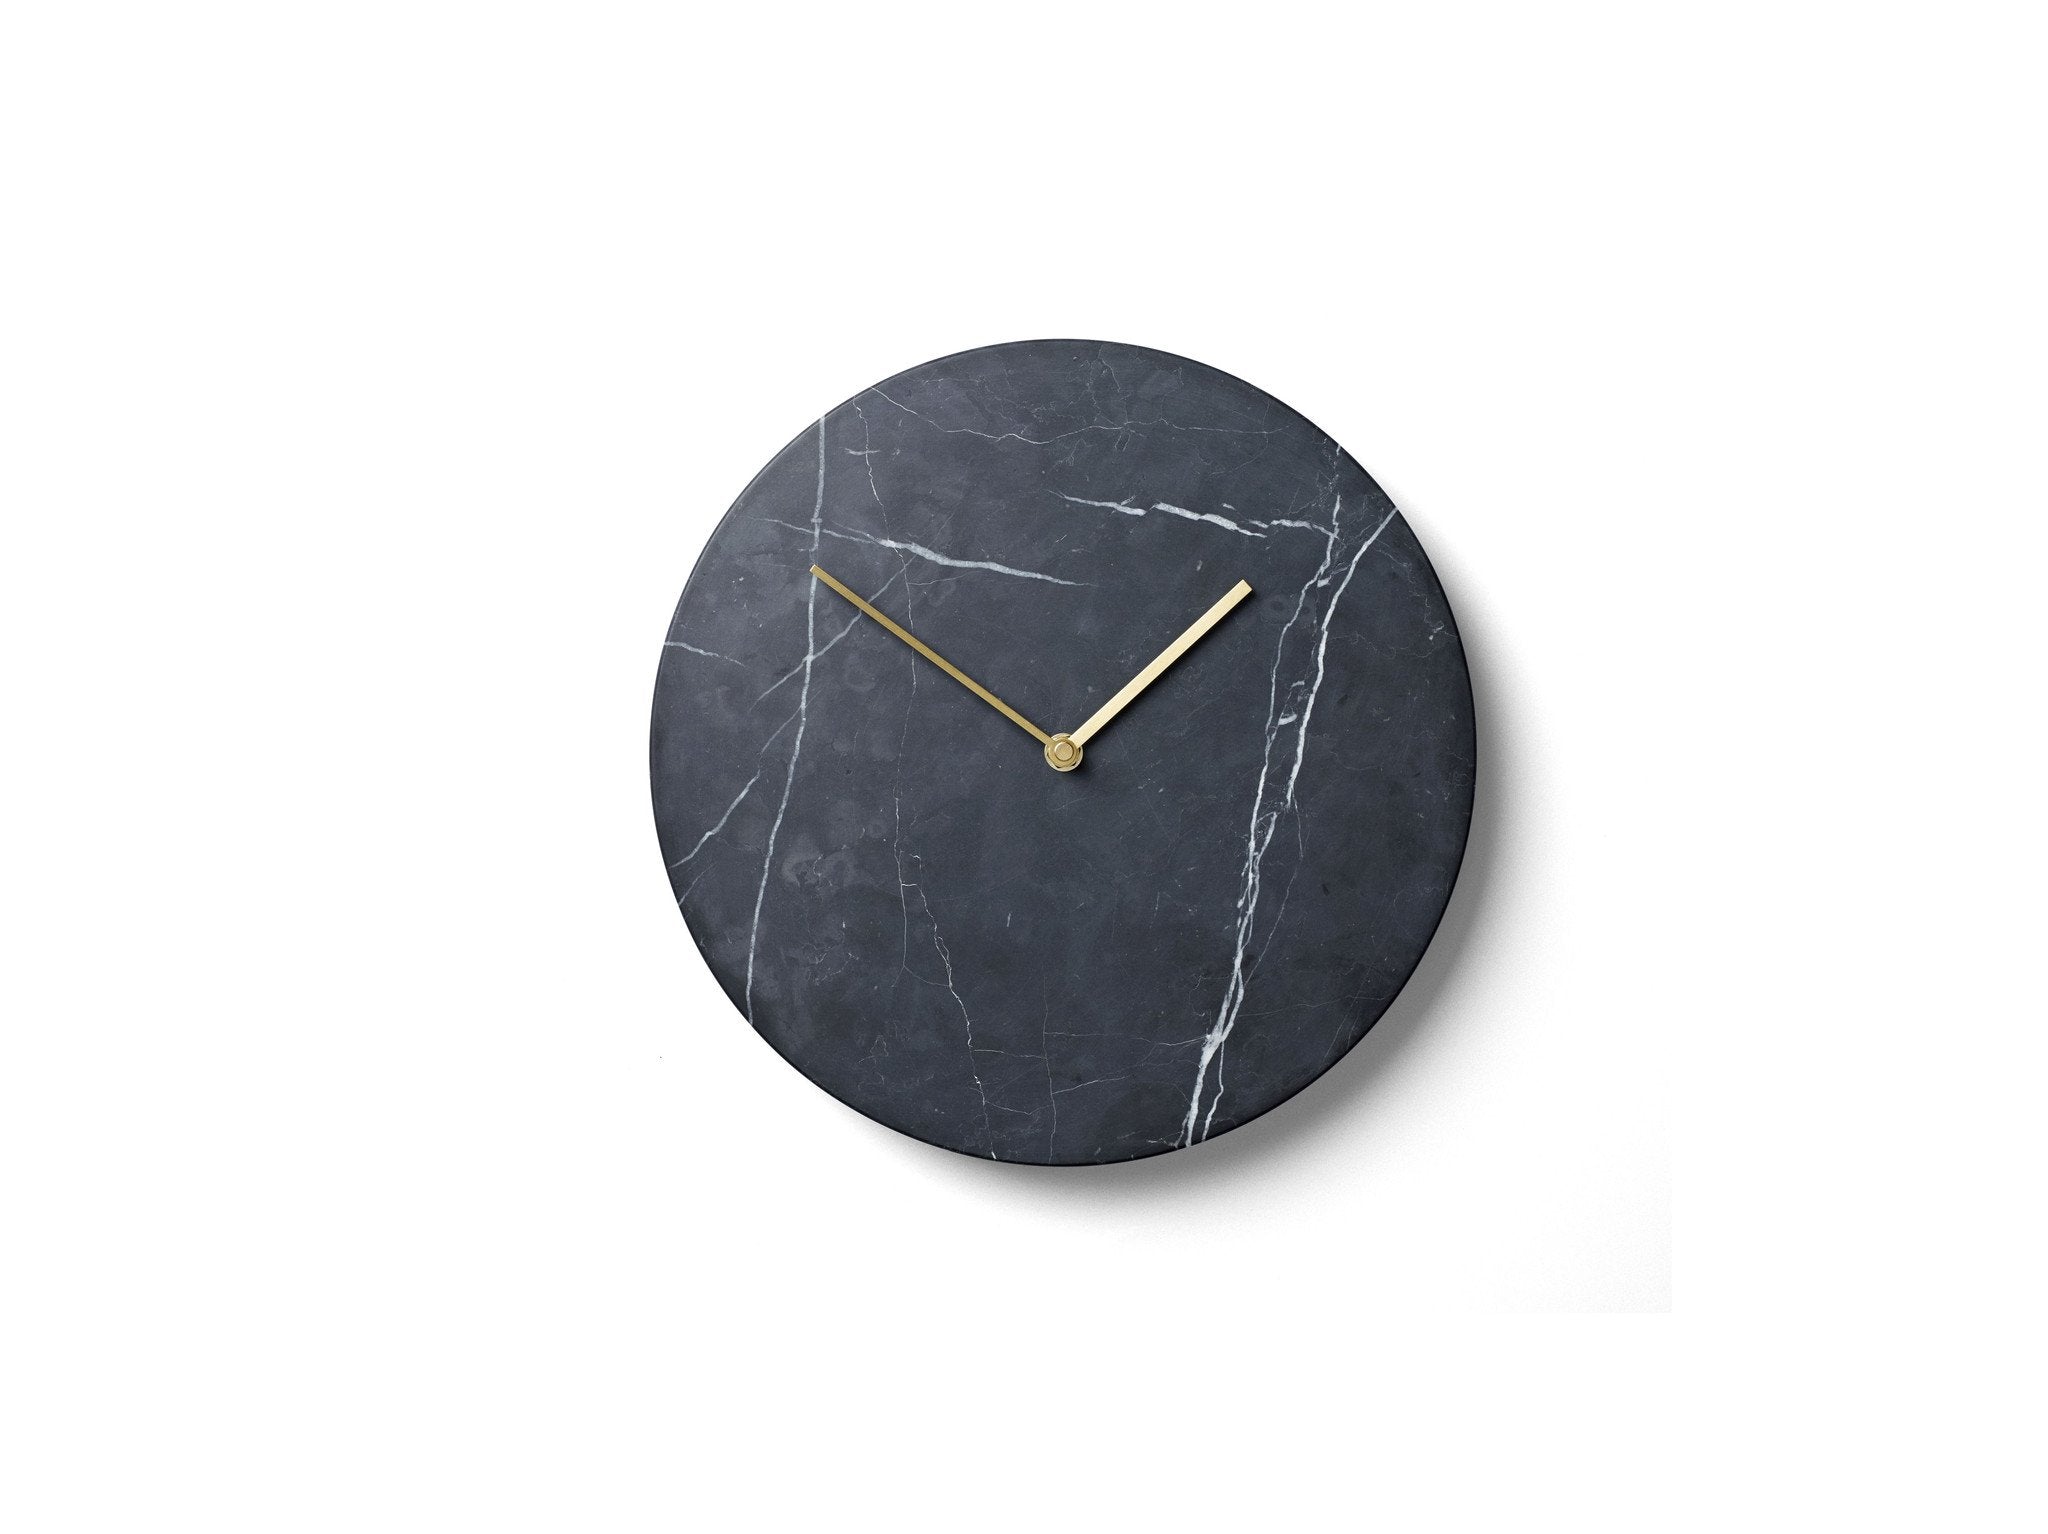 Marble Wall Clock in Black design by Menu